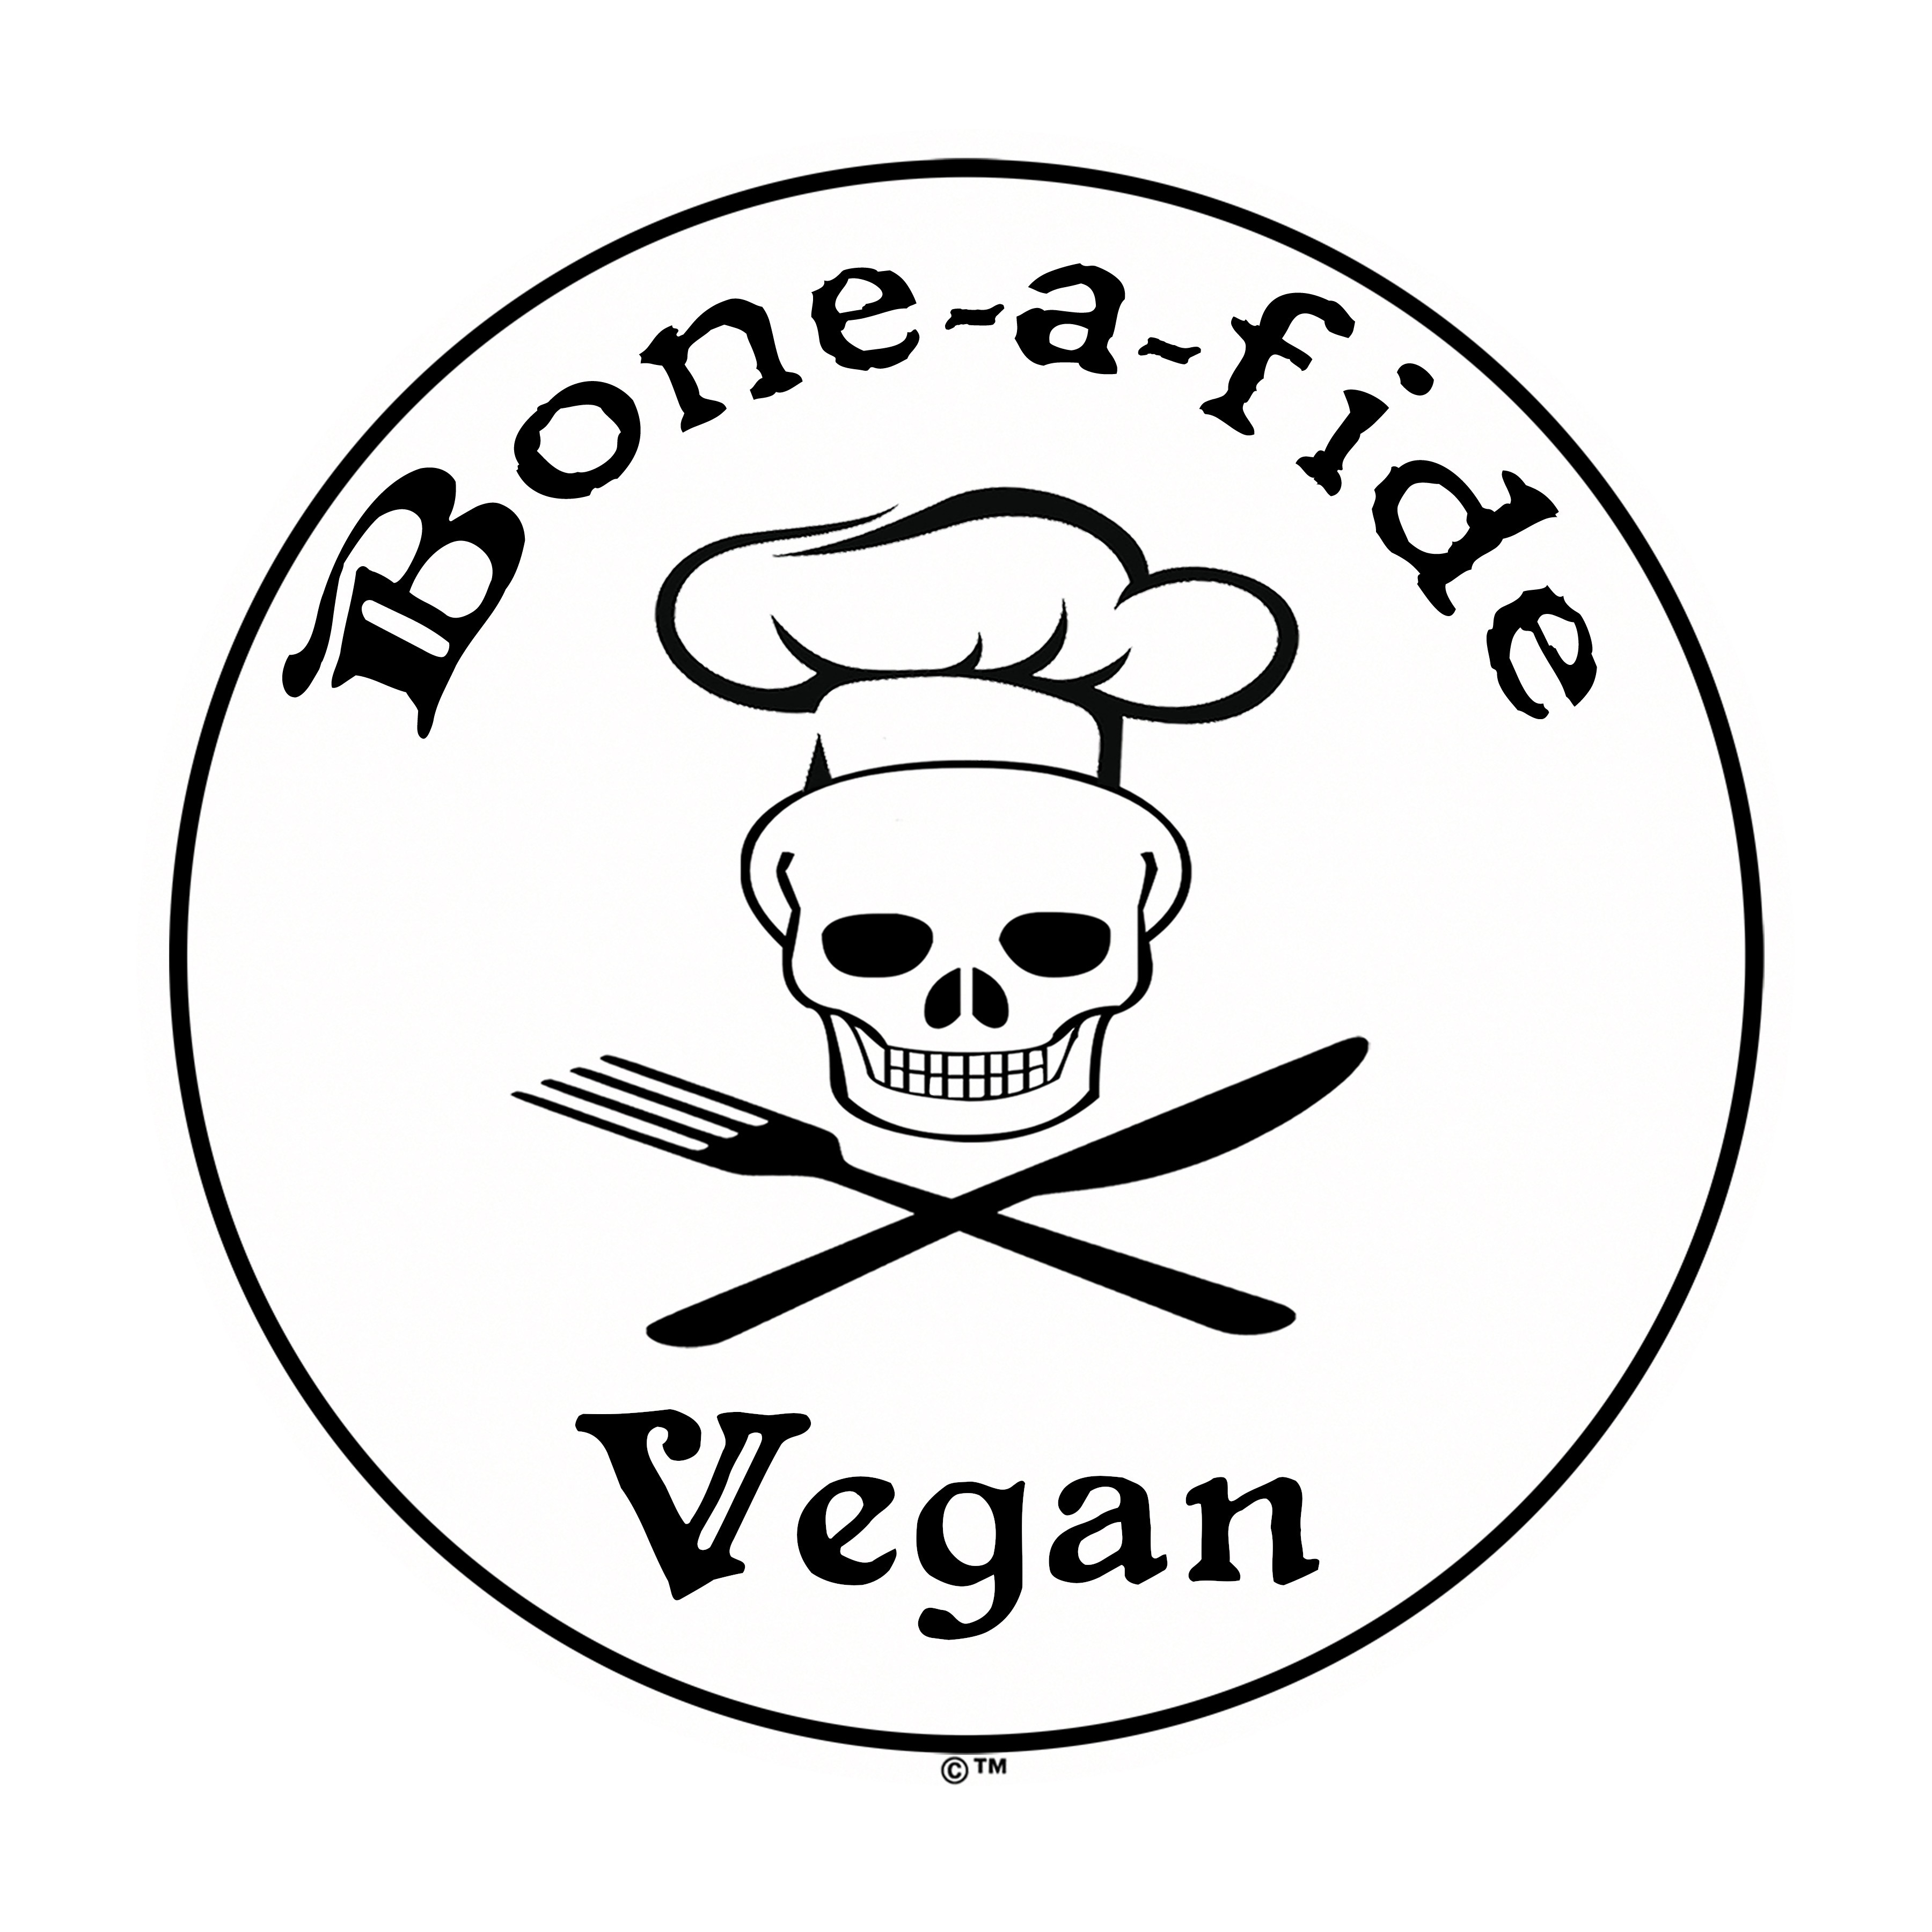 Bone-a-fide Vegan